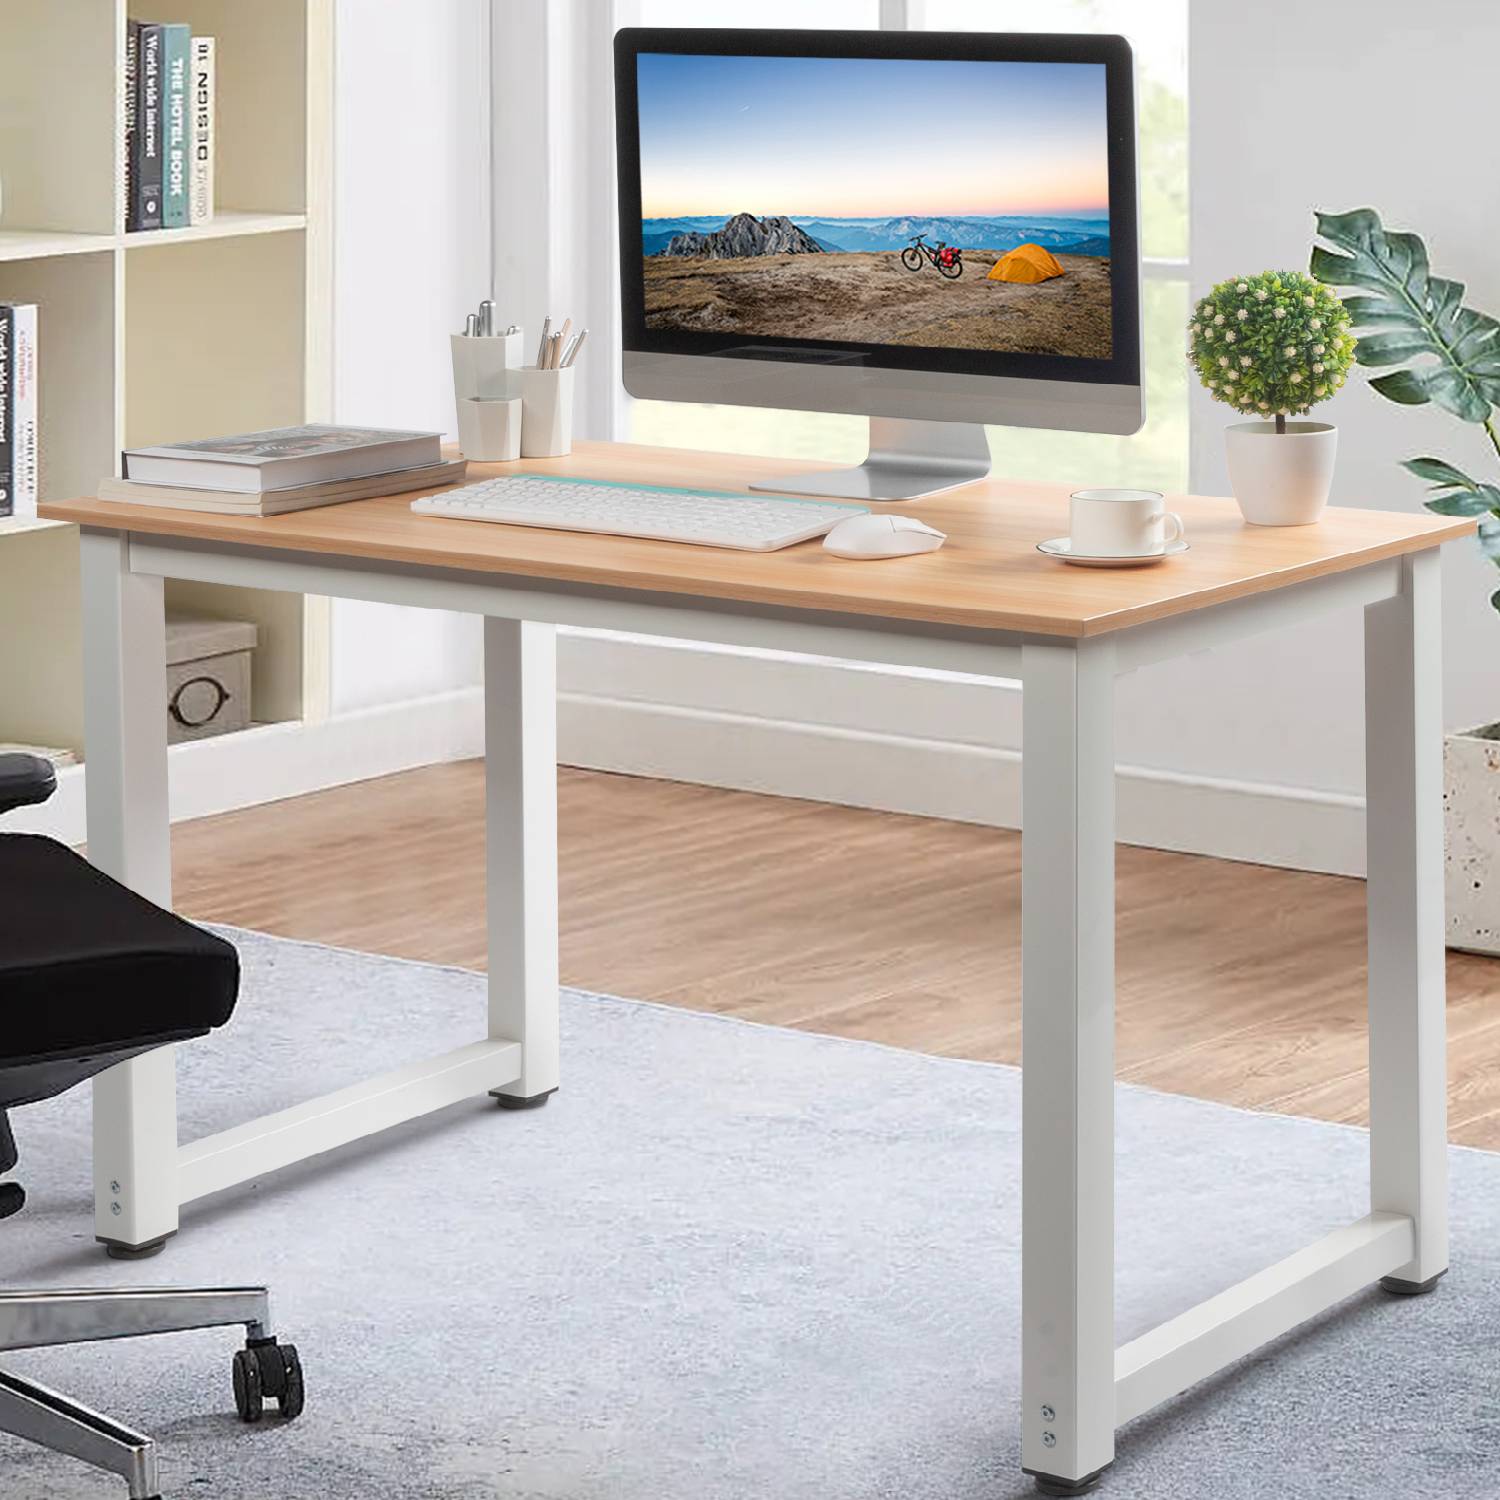 Ktaxon Wood Computer Desk PC Laptop Study Table Workstation Home Office Furniture - image 4 of 10